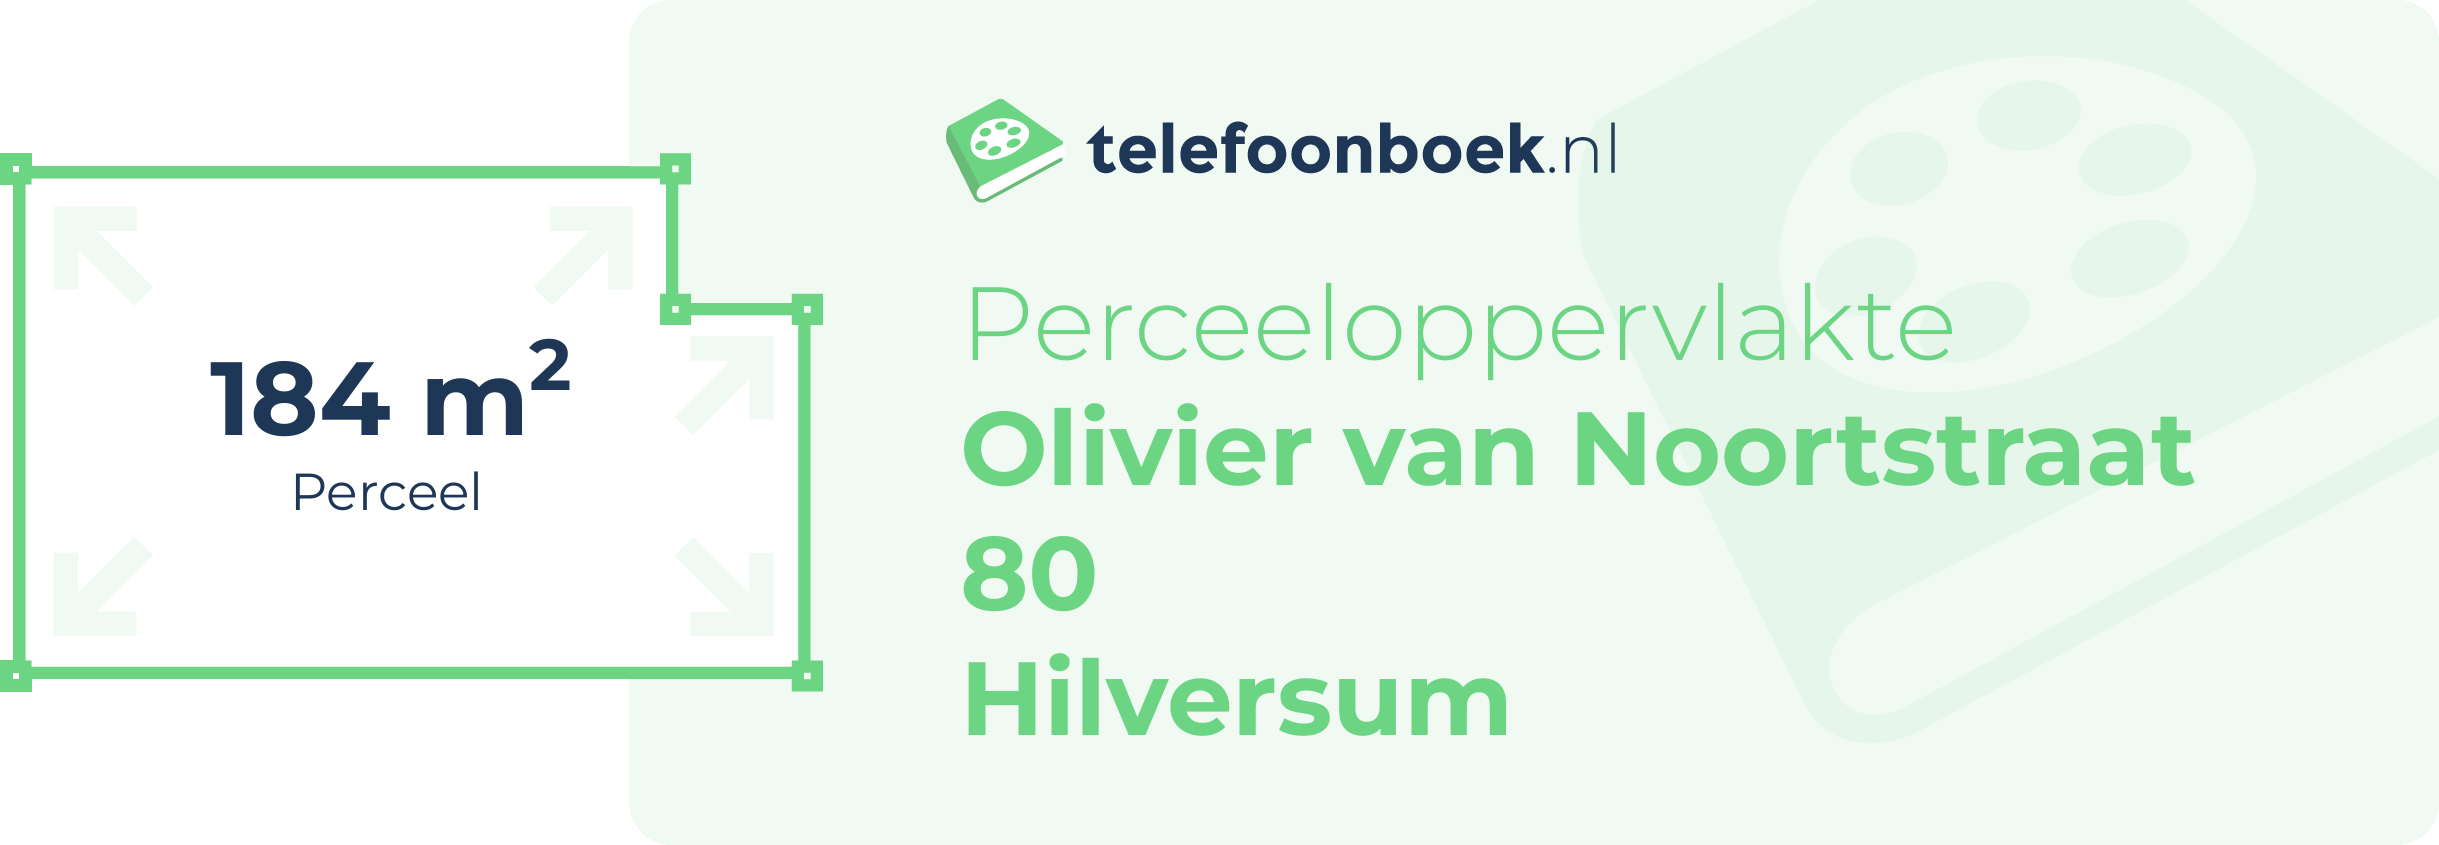 Perceeloppervlakte Olivier Van Noortstraat 80 Hilversum